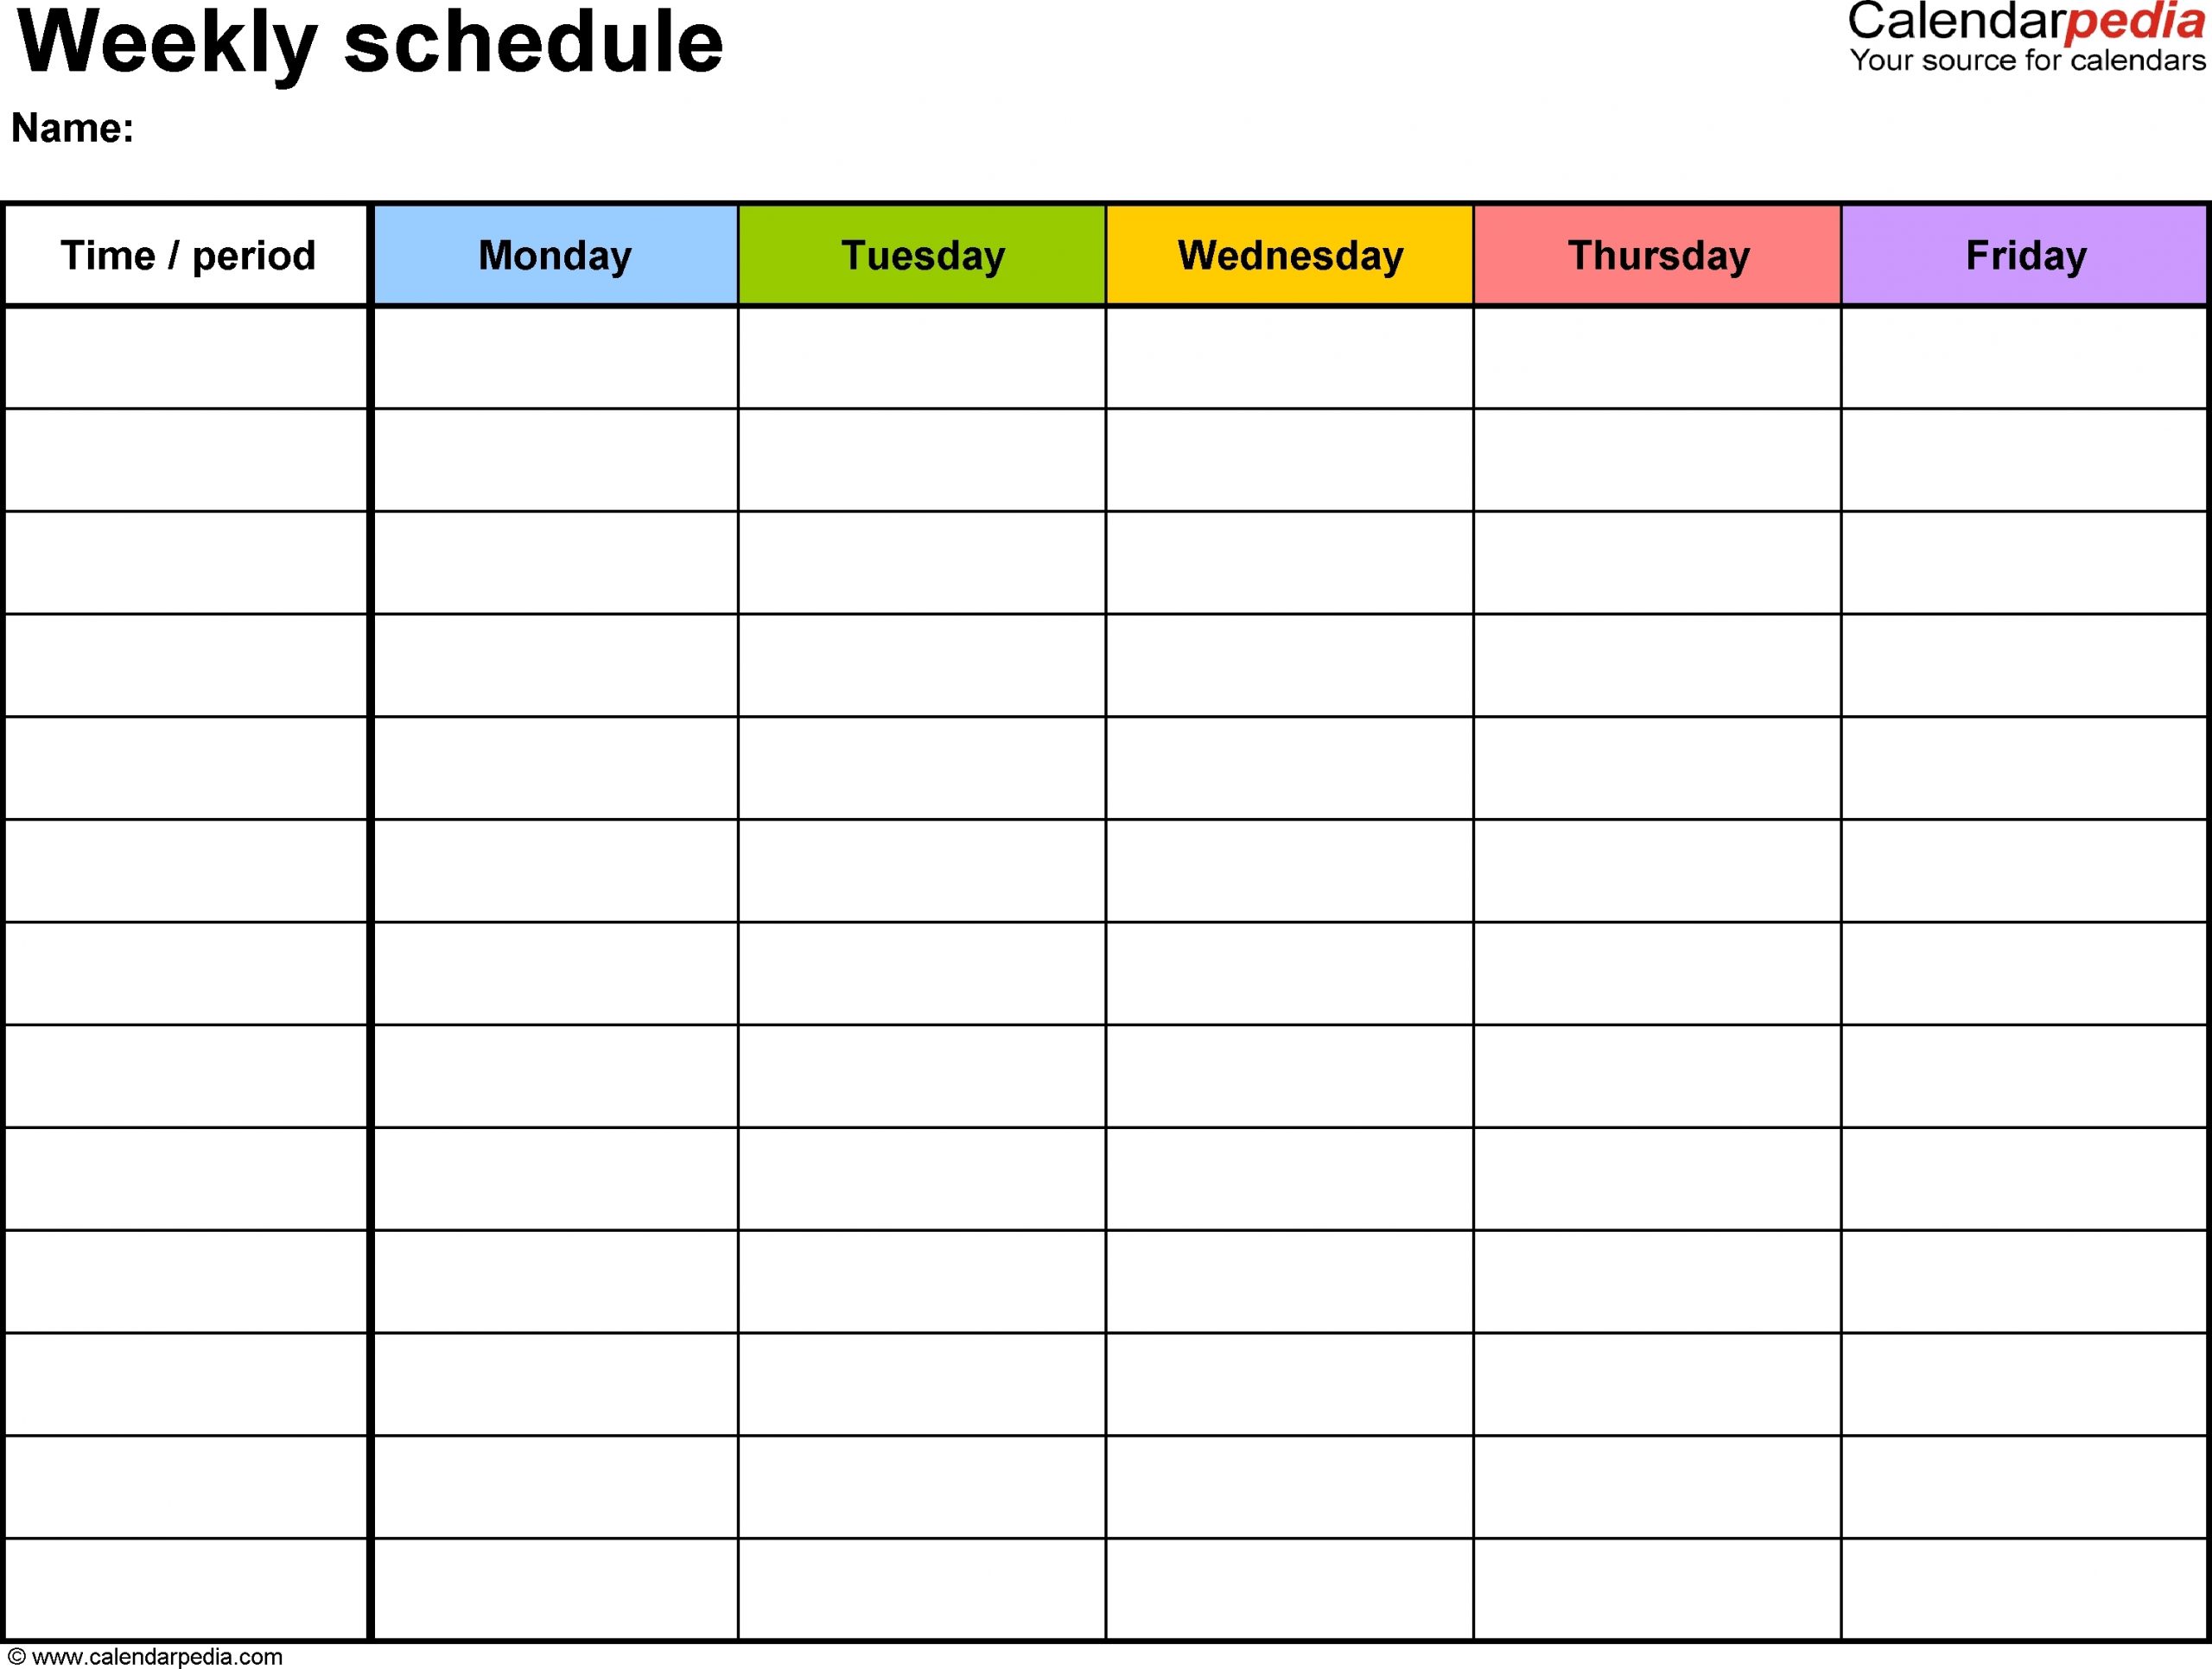 Get Weekly Schedule Time Schedule